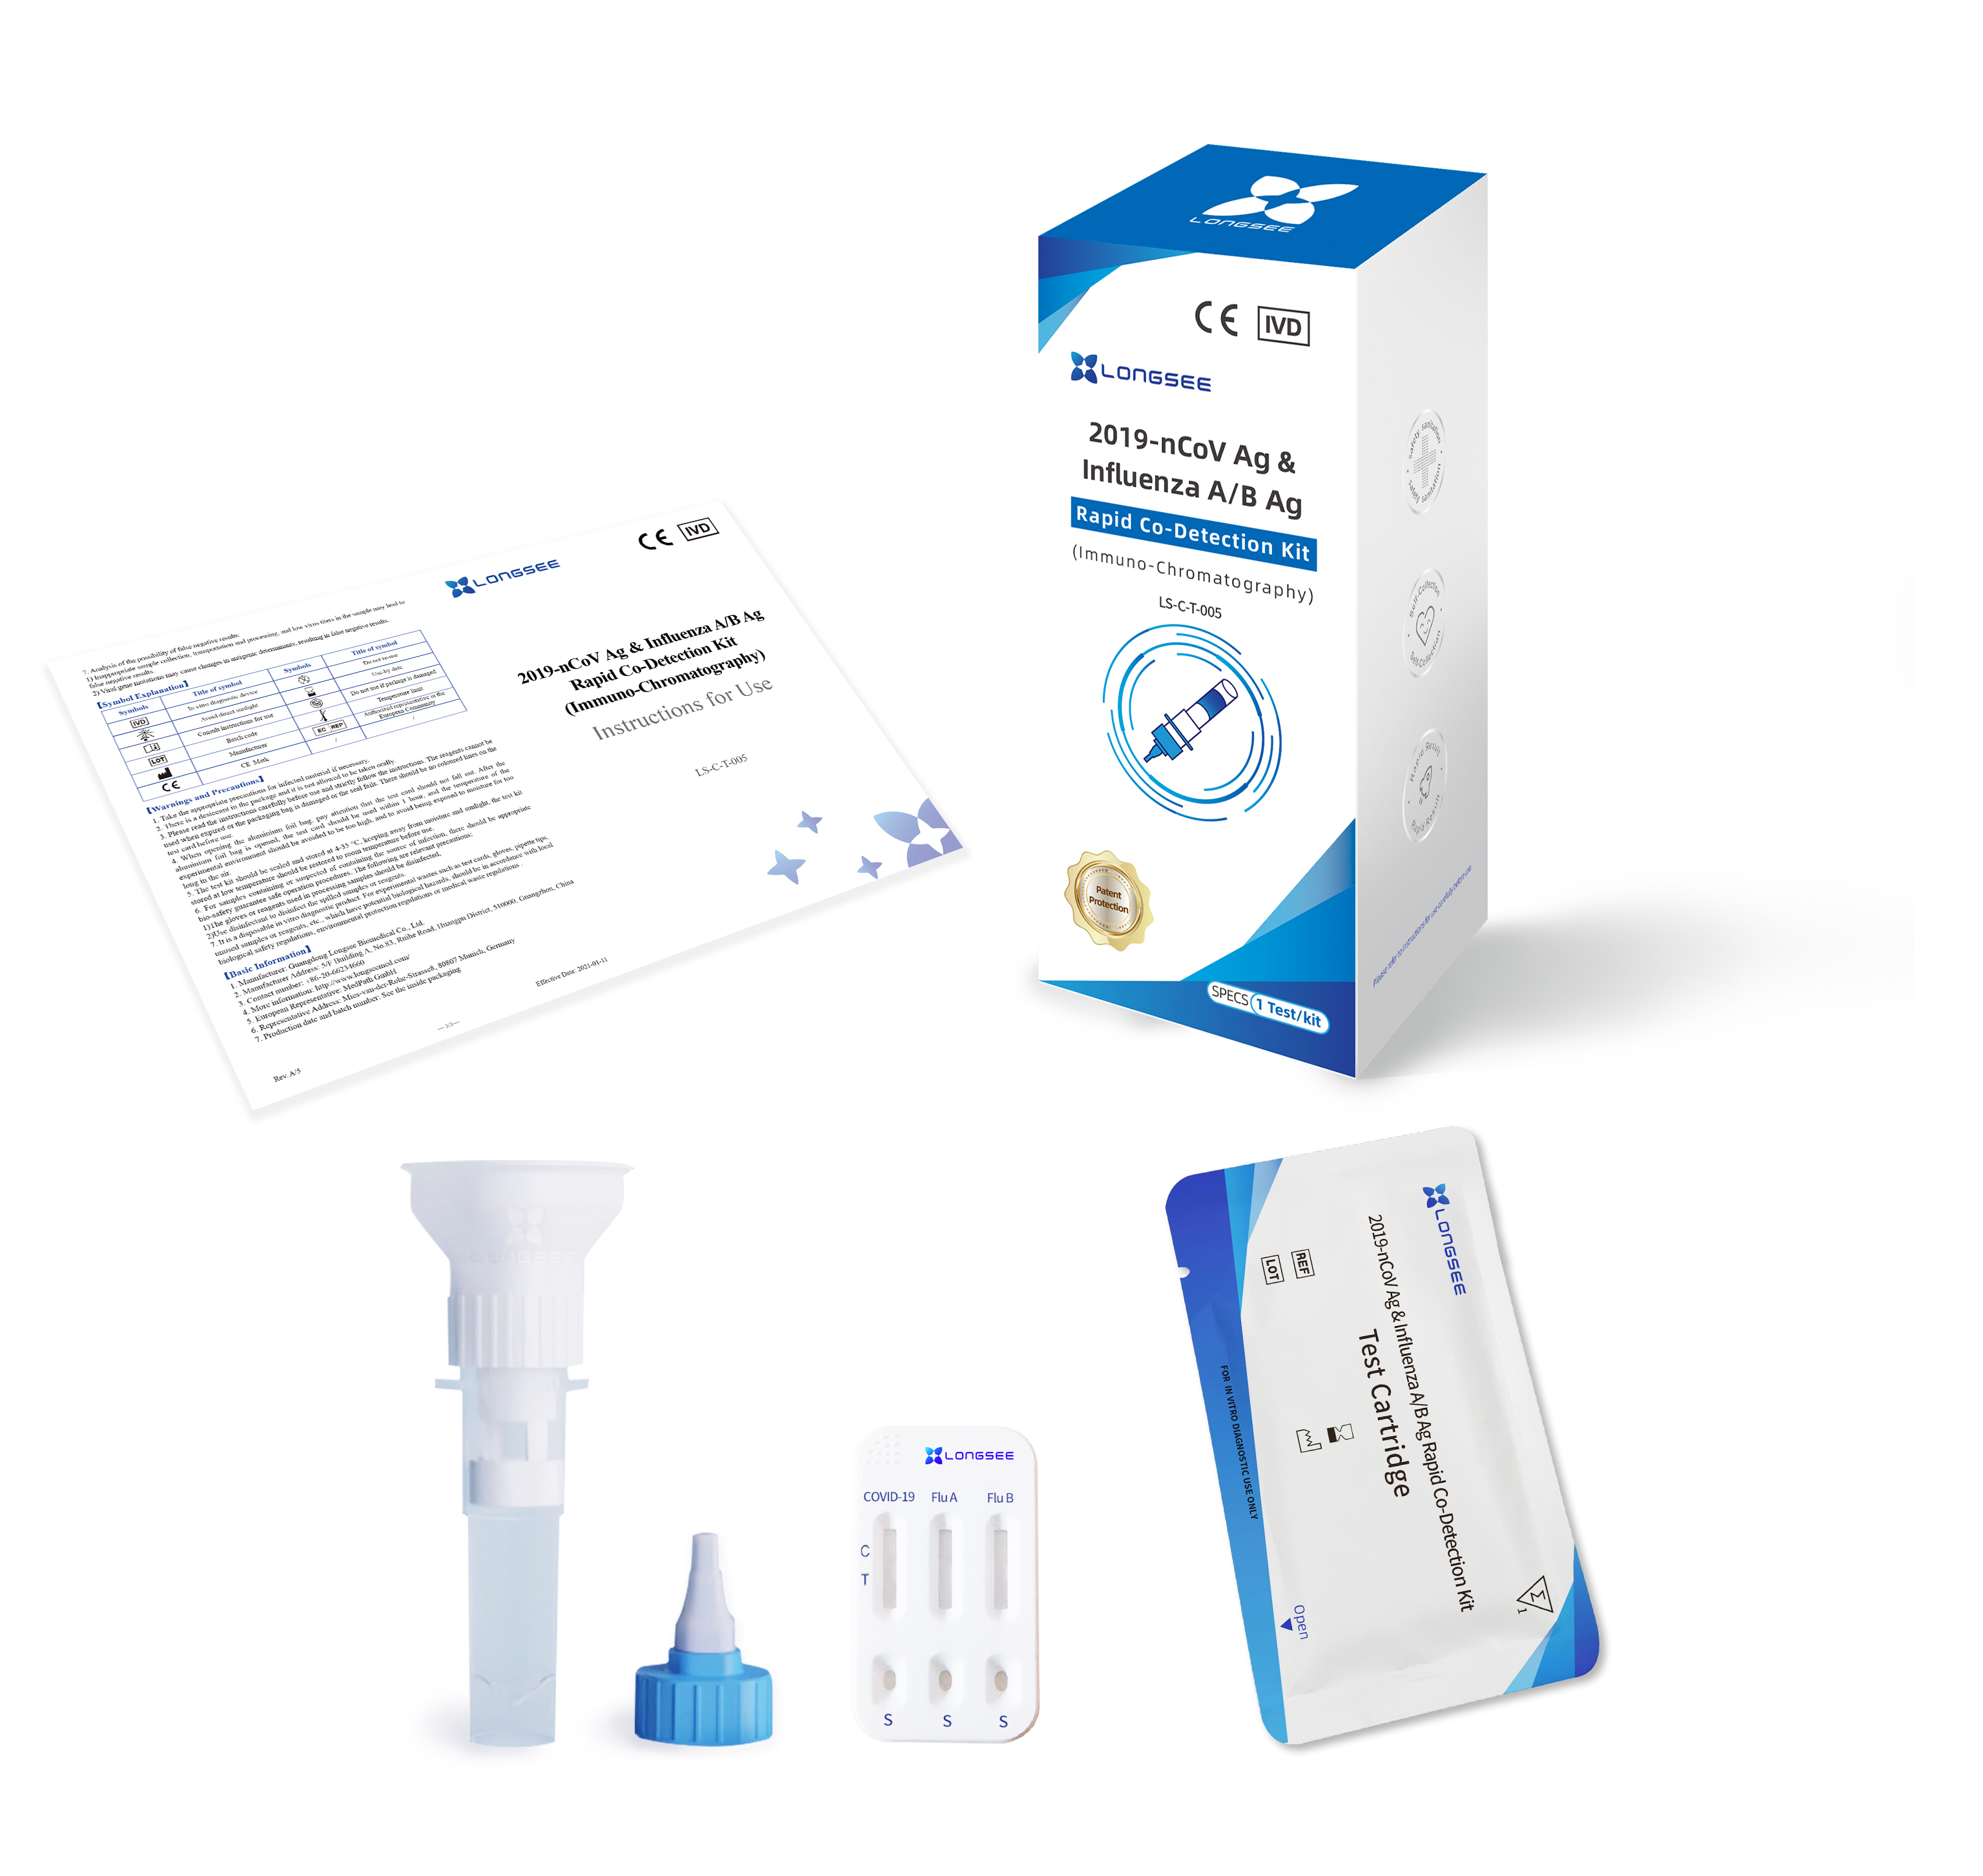 2019-nCoV Ag & Influenza A/B Ag Rapid Co-Detection Kit (Immuno-Chromatography)